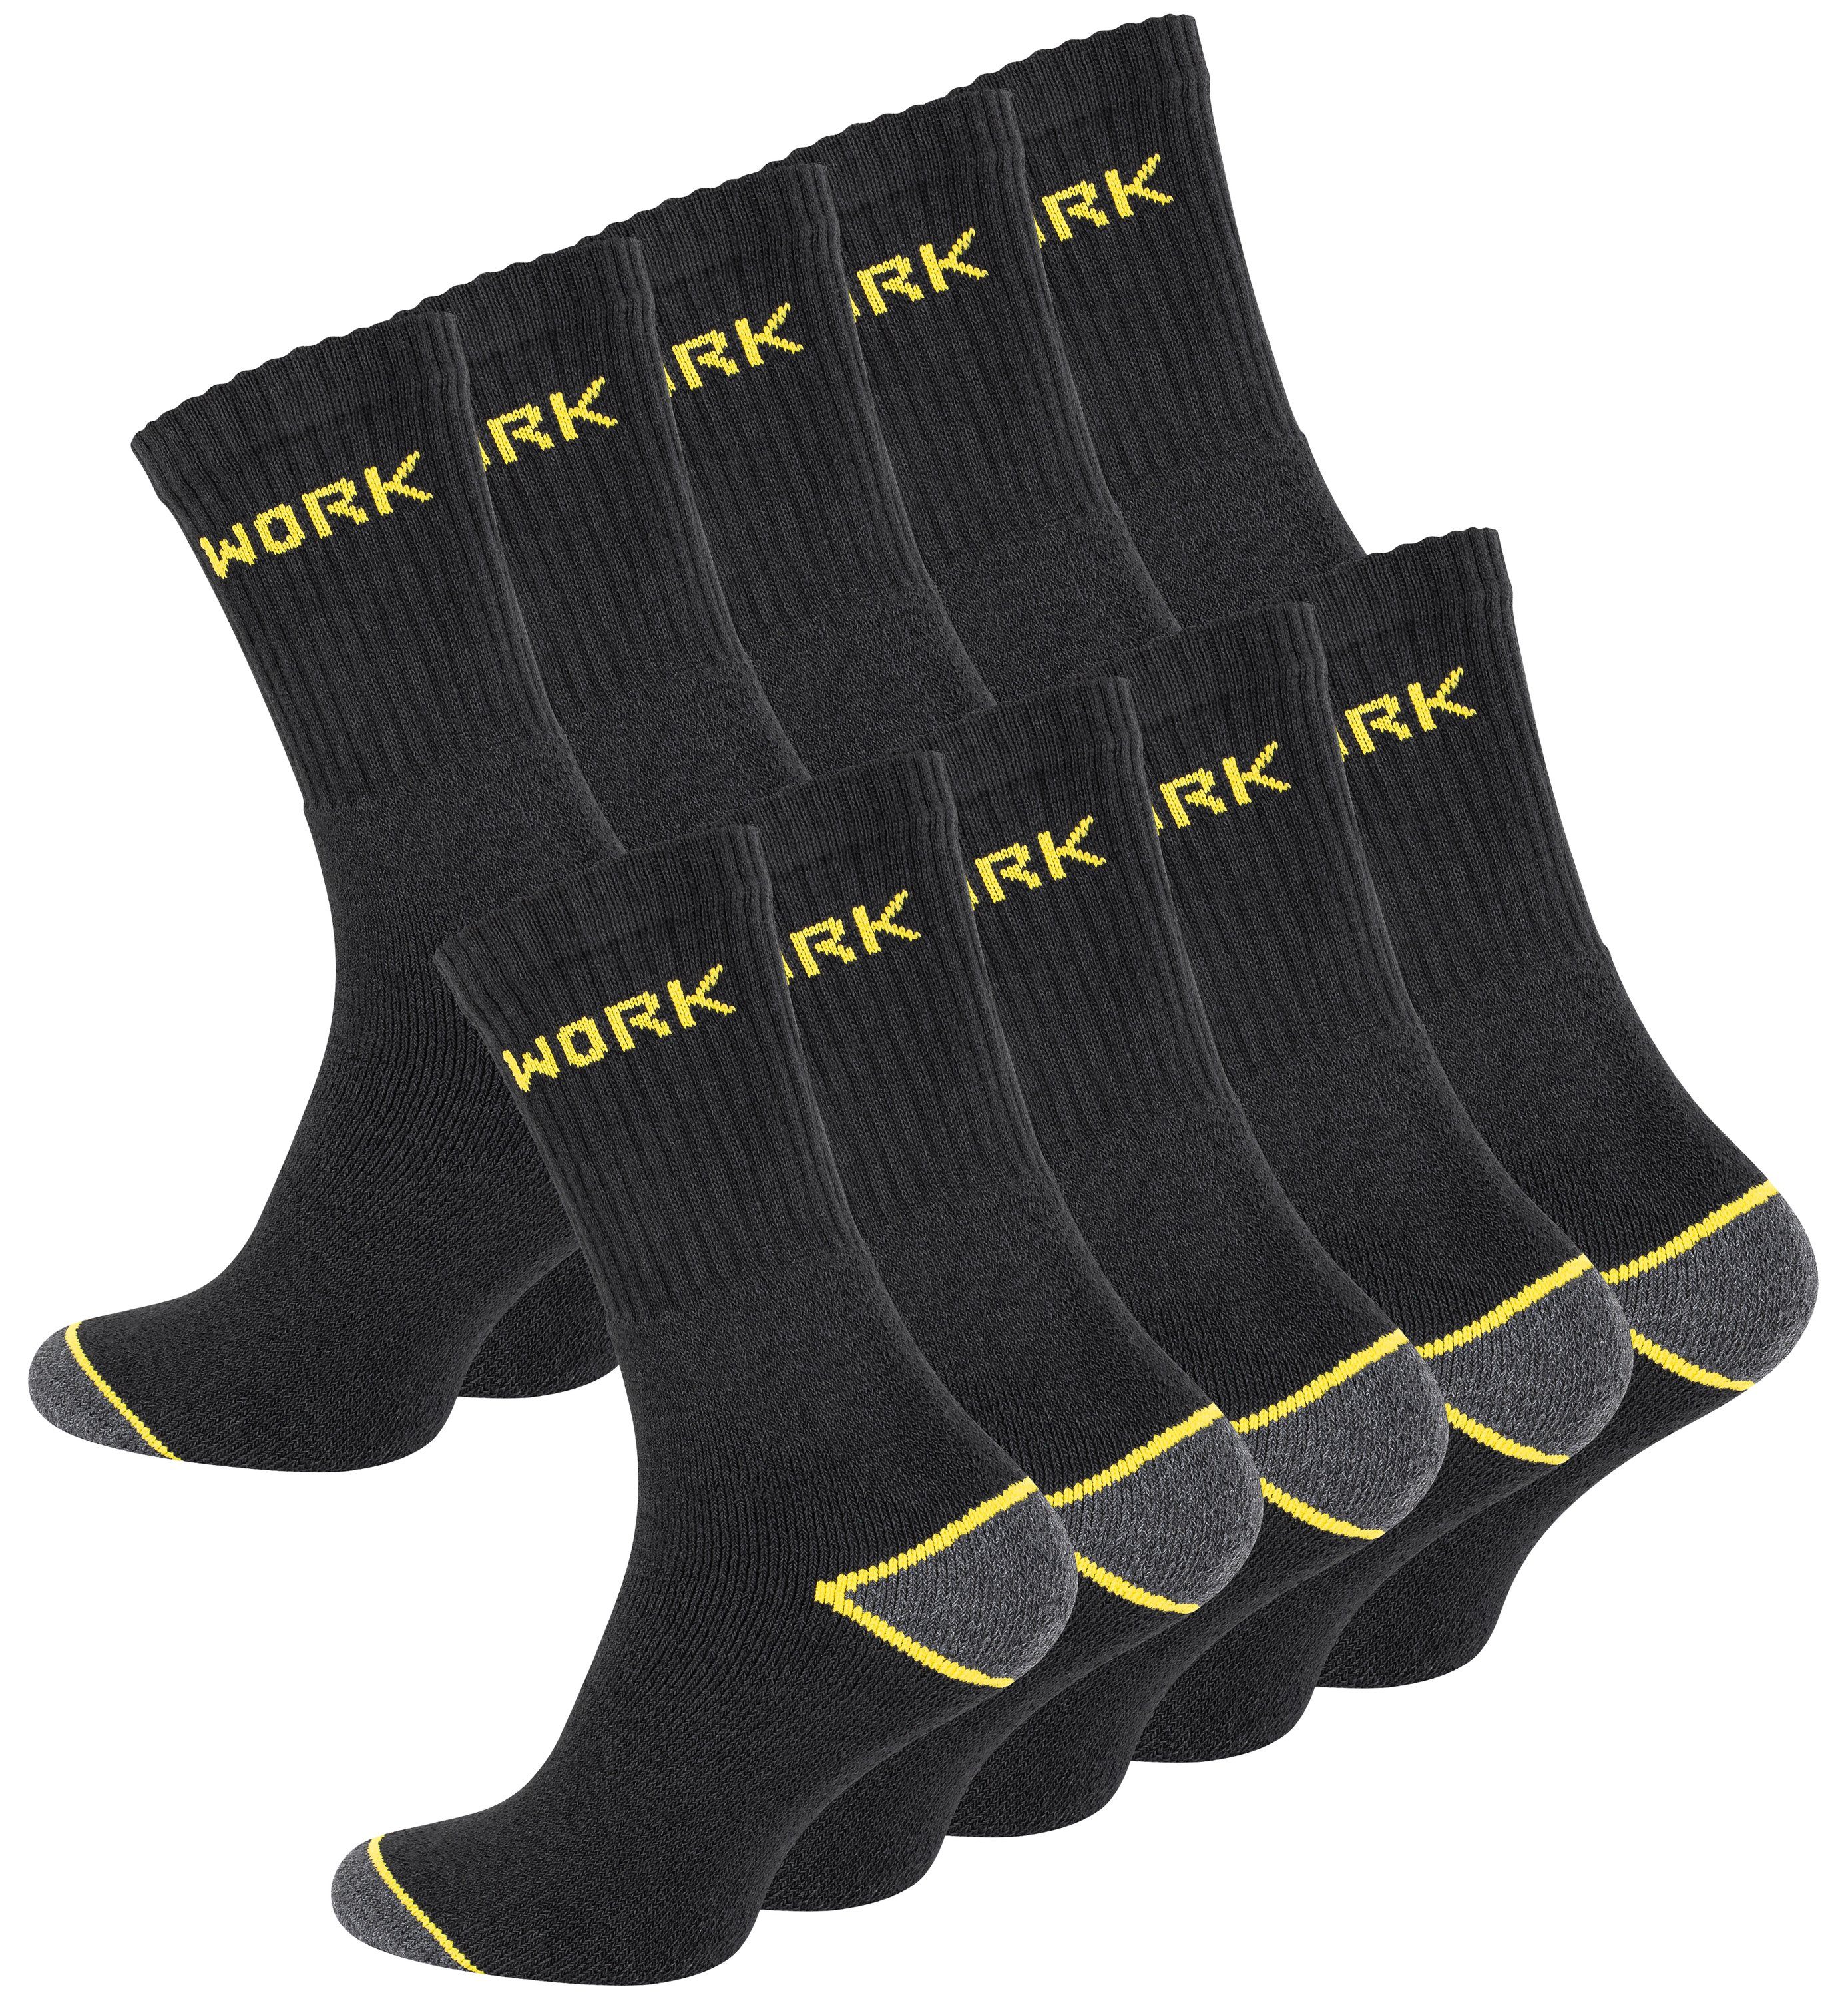 Cotton Prime® Socken »Work-Socks« (10-Paar) robuster Materialmix